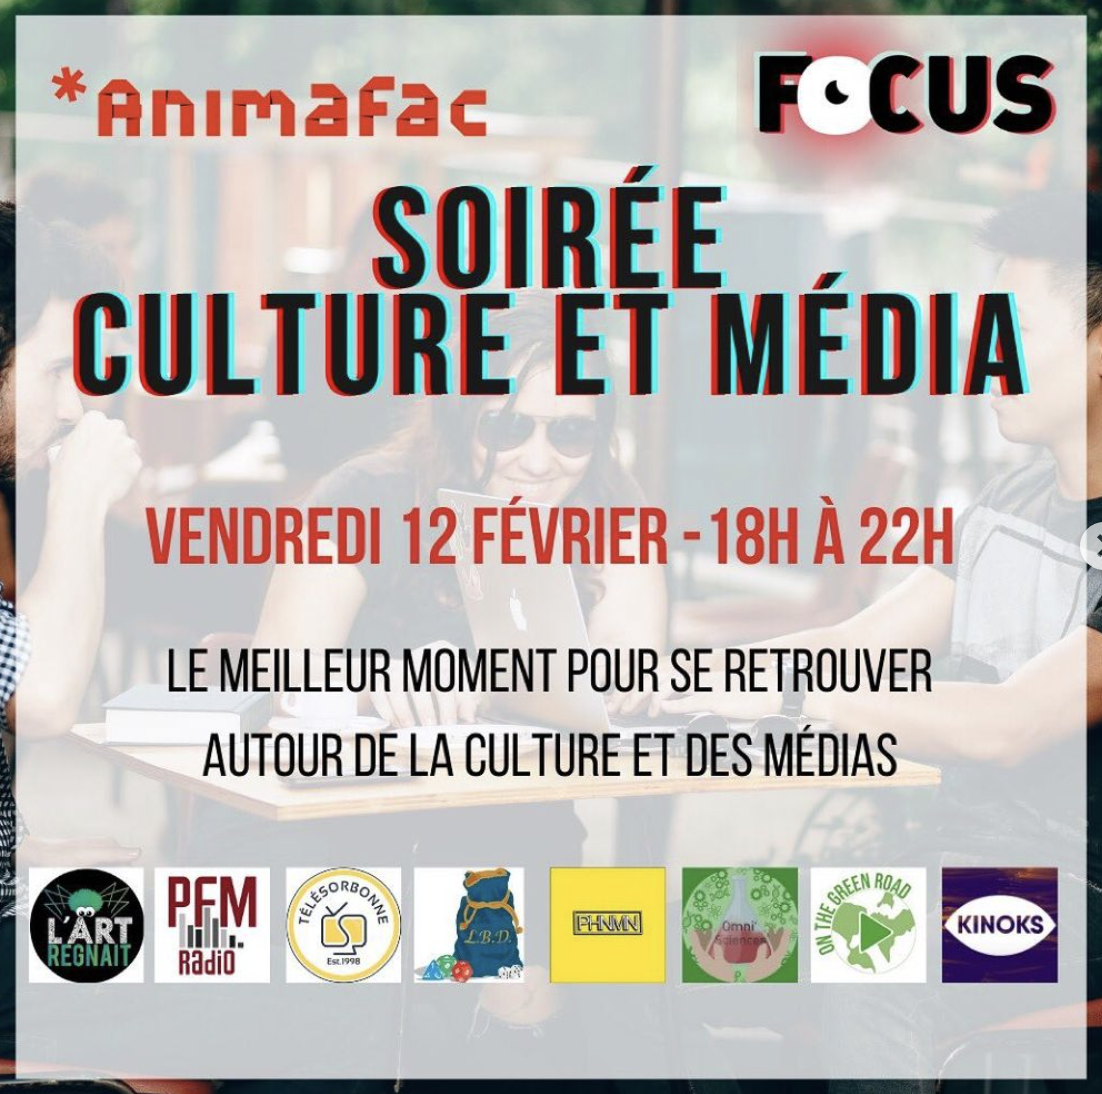 Soirée culture et média Focus Animafac